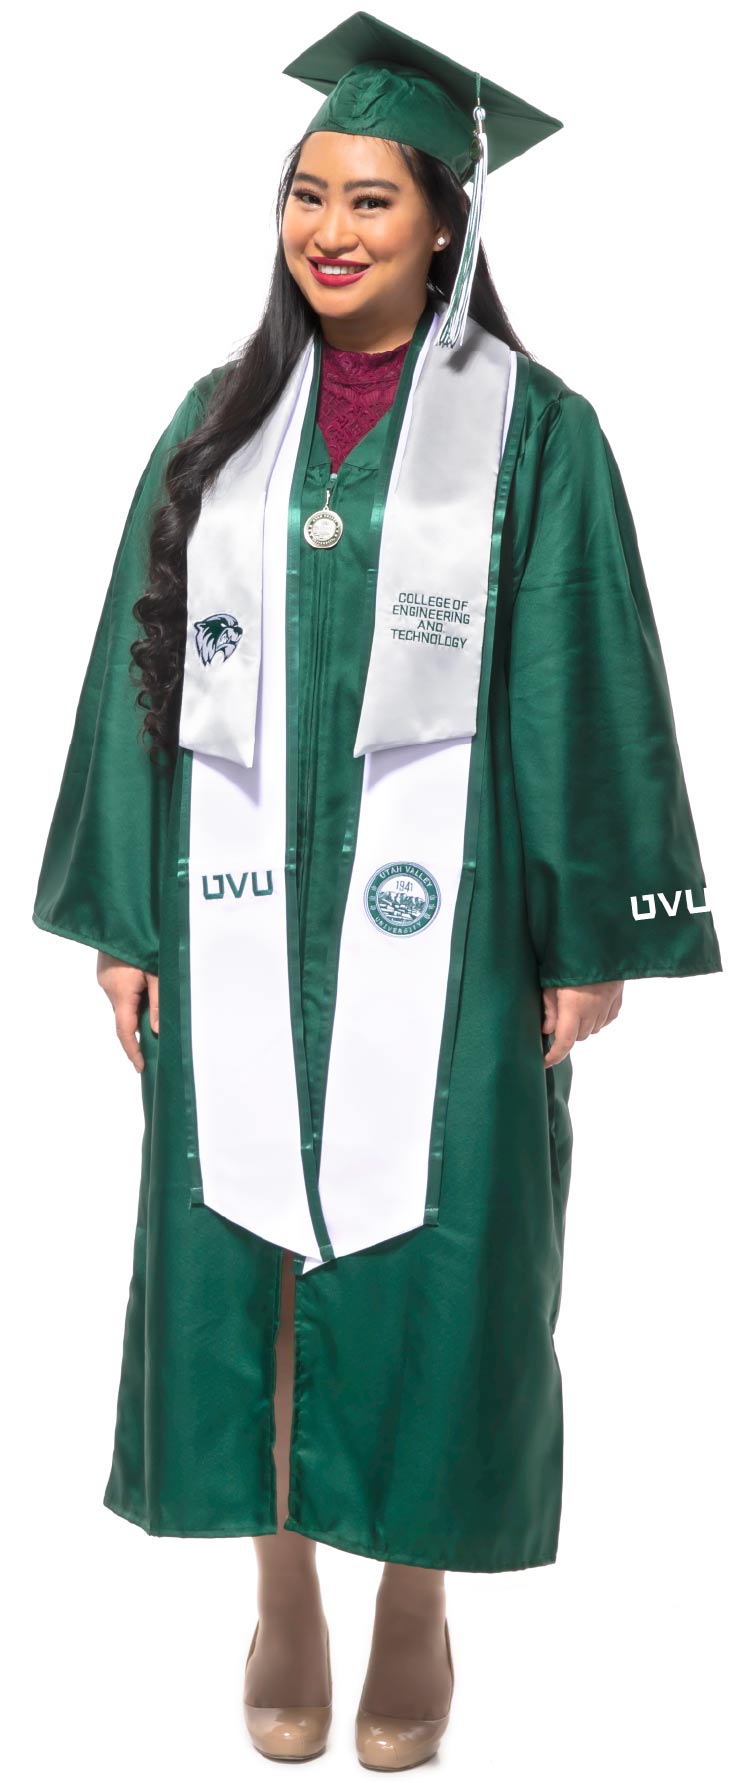 UVU women student in green UVU regalia.